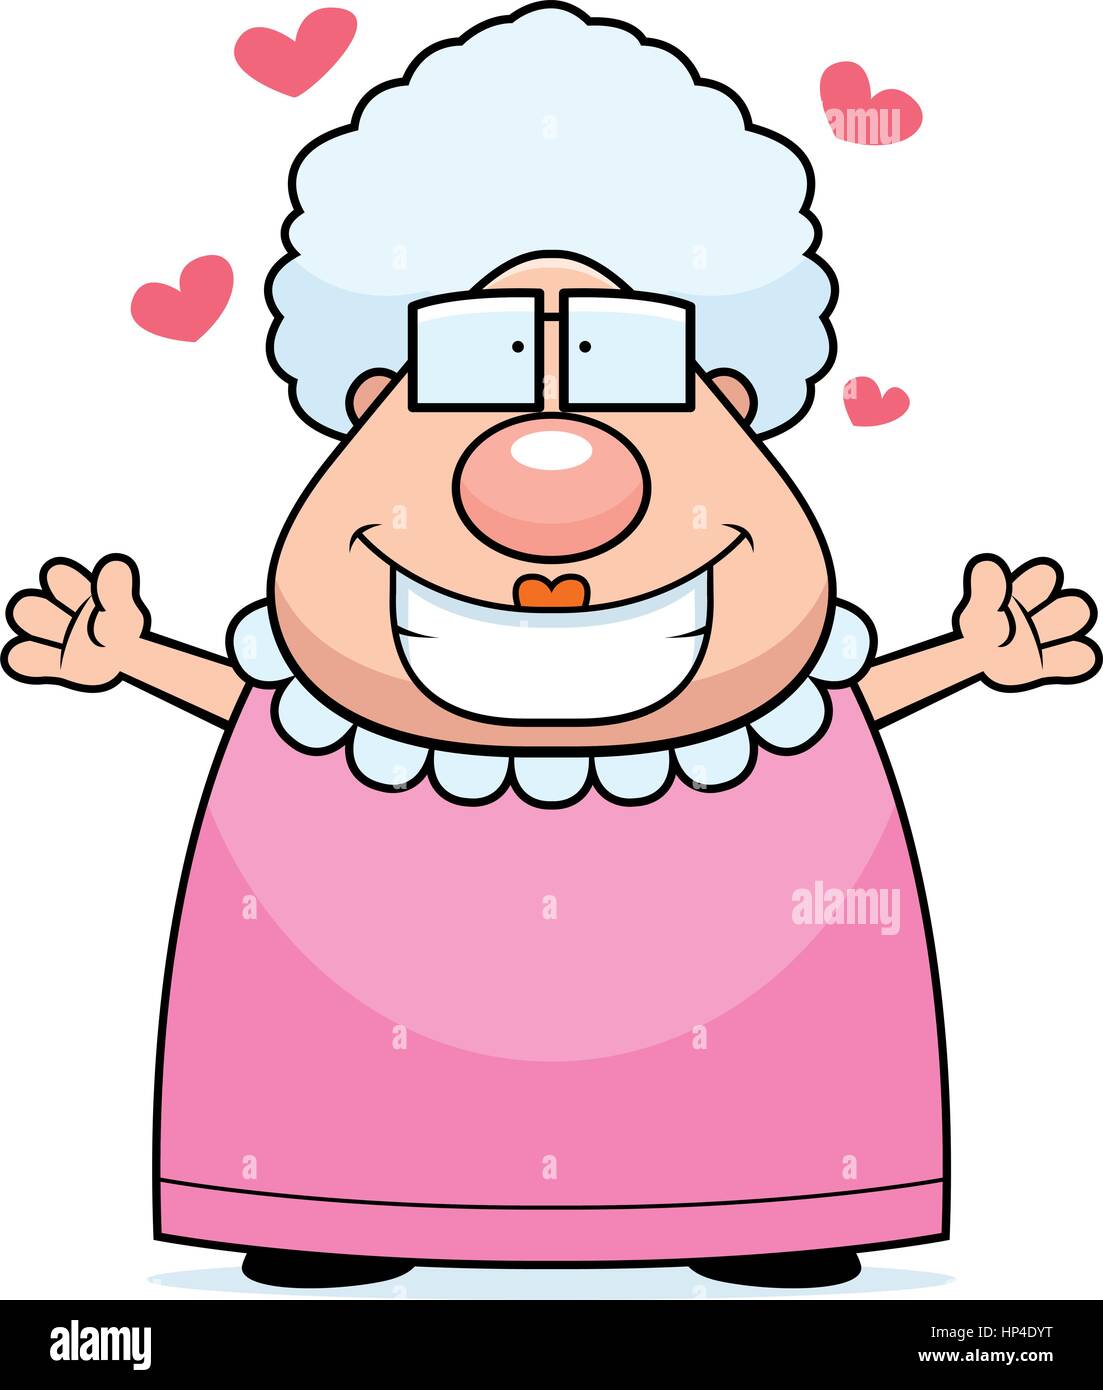 A happy cartoon grandma ready to give a hug Stock Vector Image & Art - Alamy